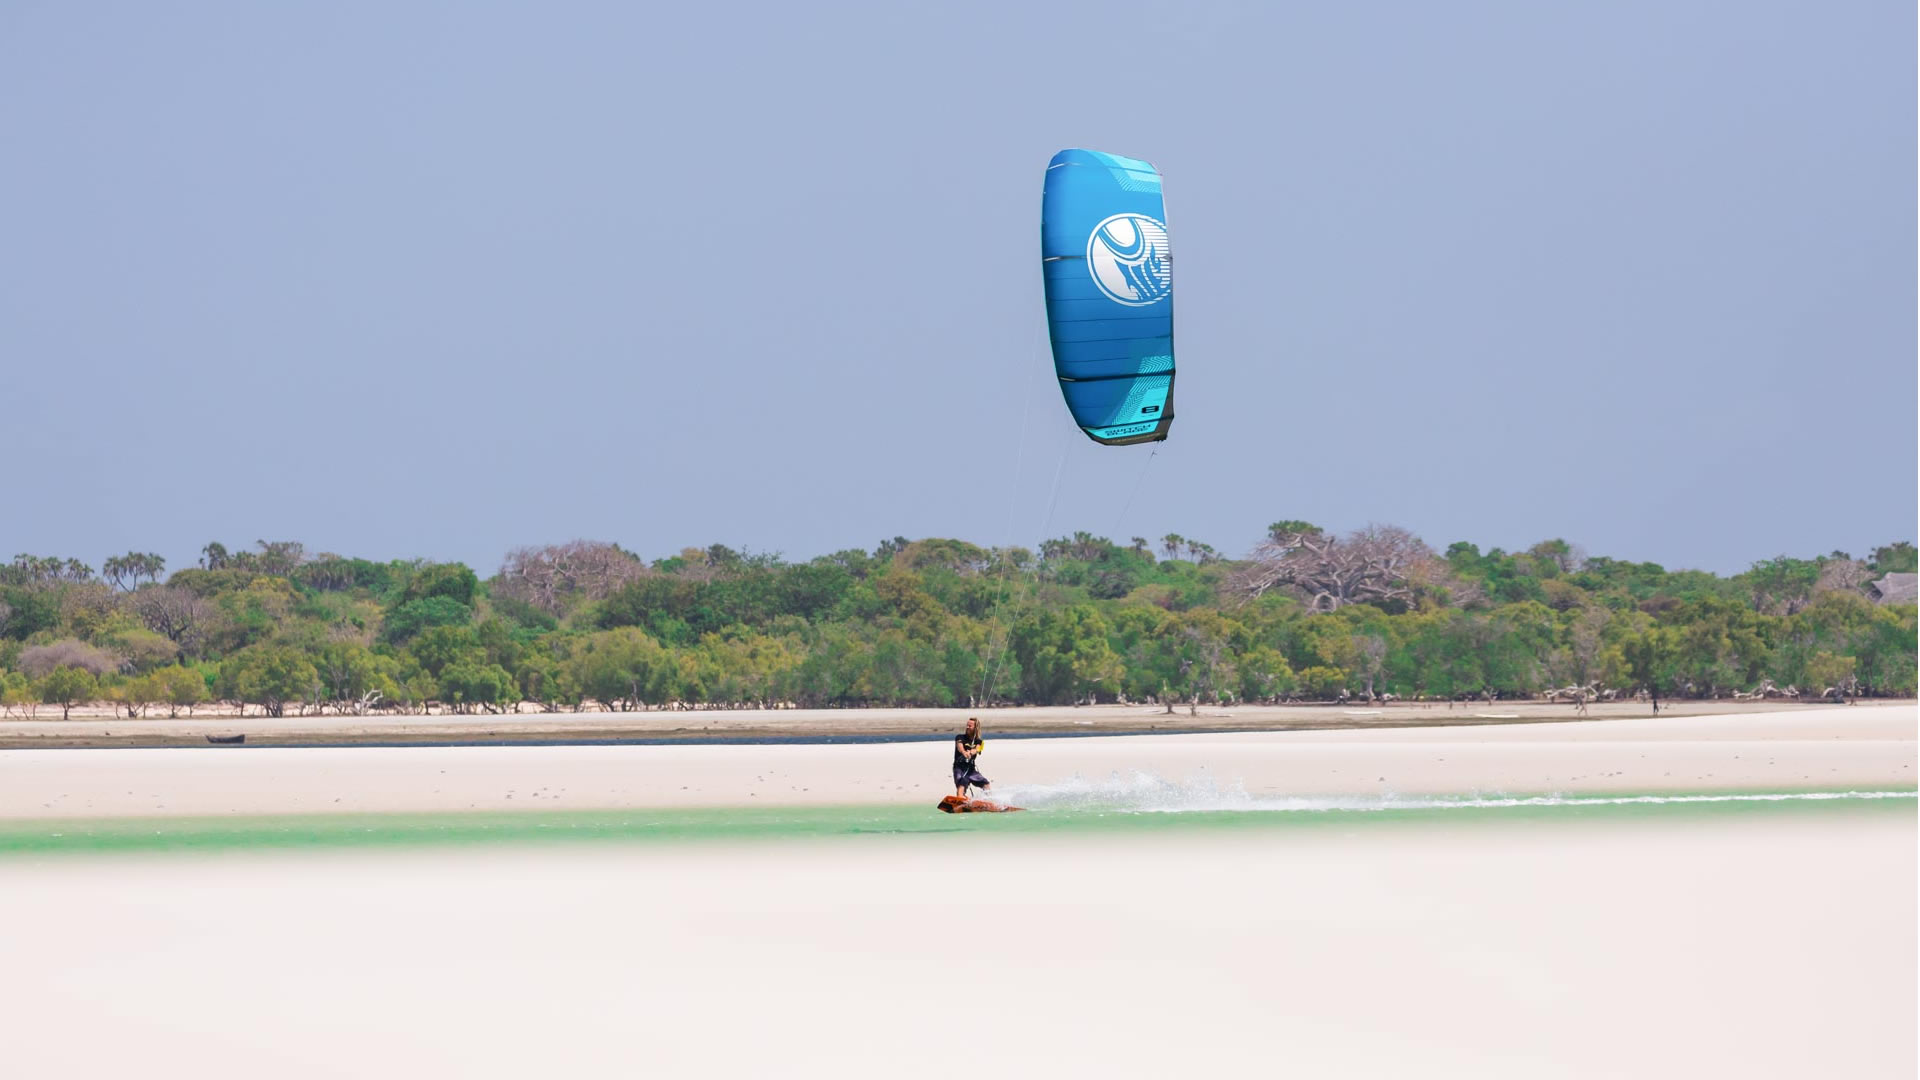 funzi island - kite surfing